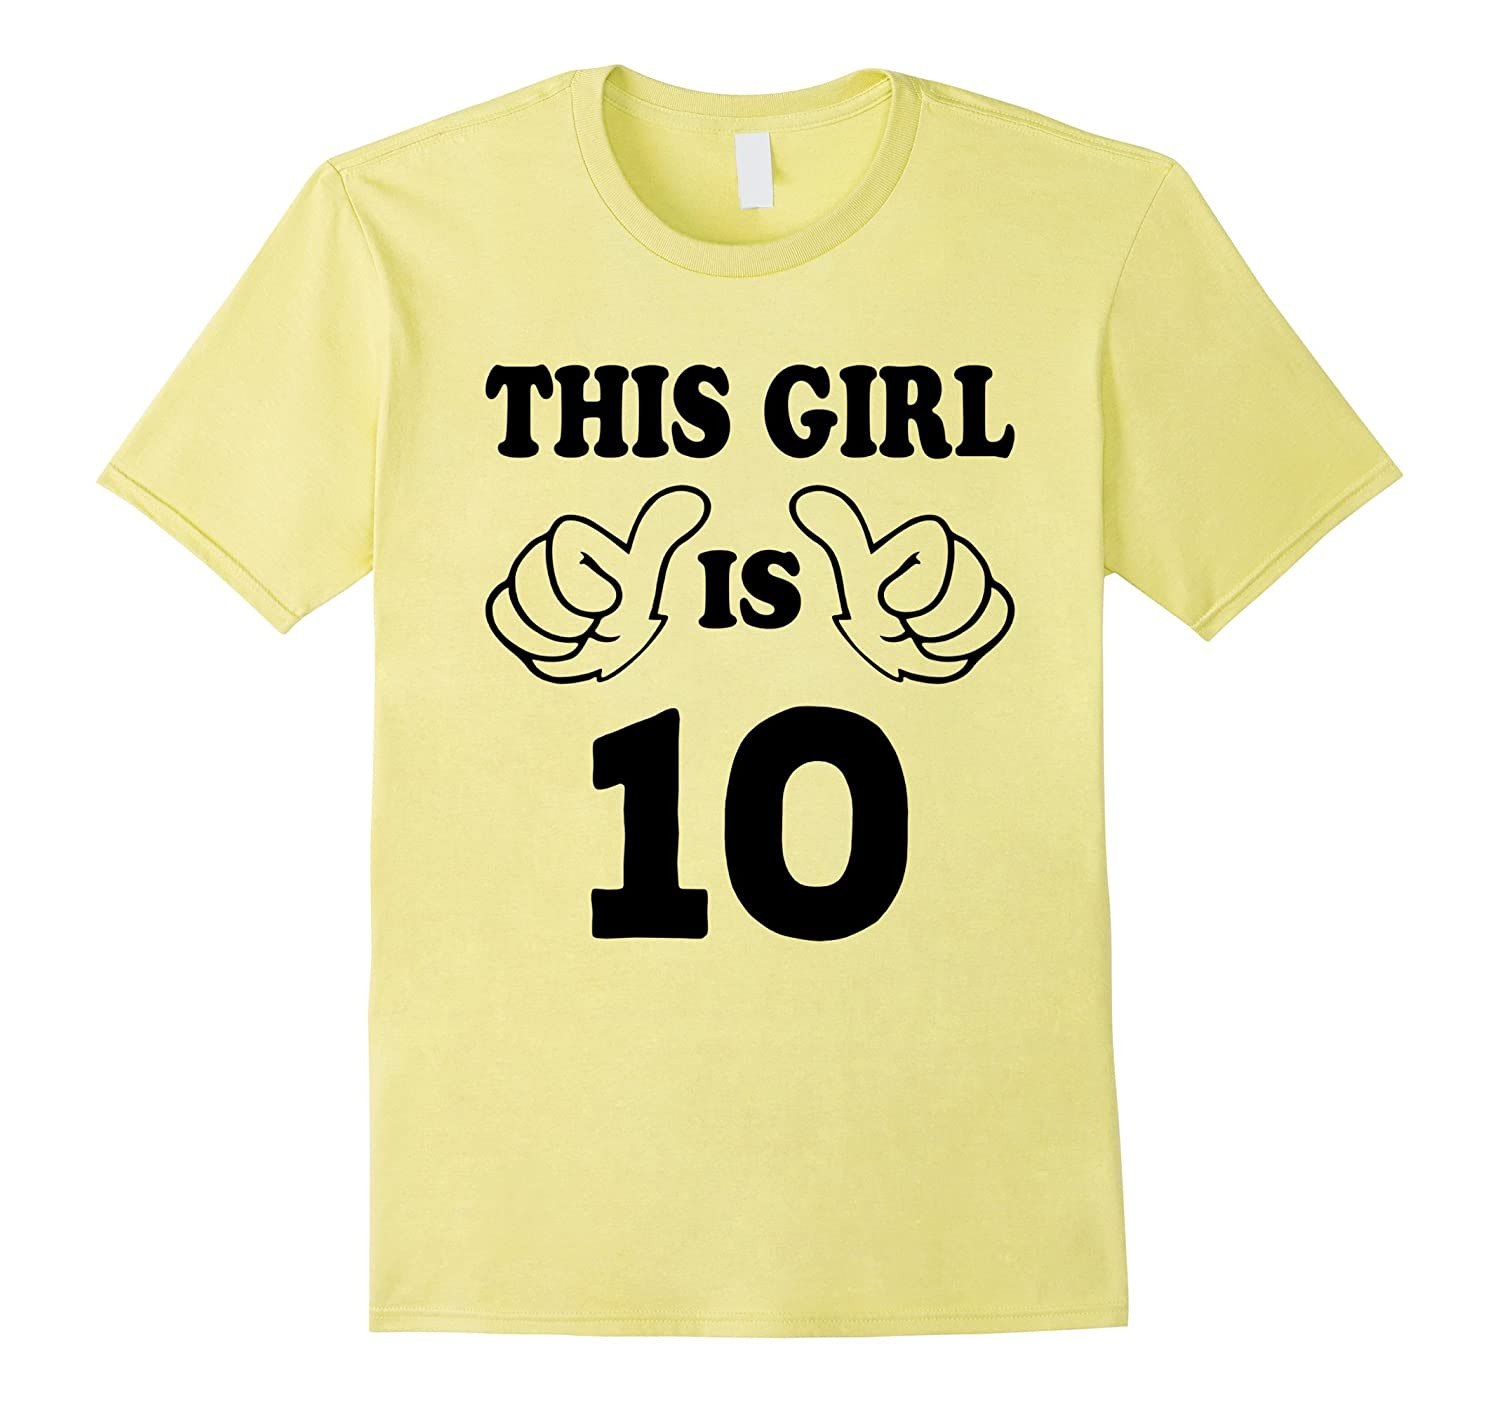 10 Year Girl Birthday Gift Ideas
 This Girl is ten 10 Years Old 10th Birthday Gift Ideas PL